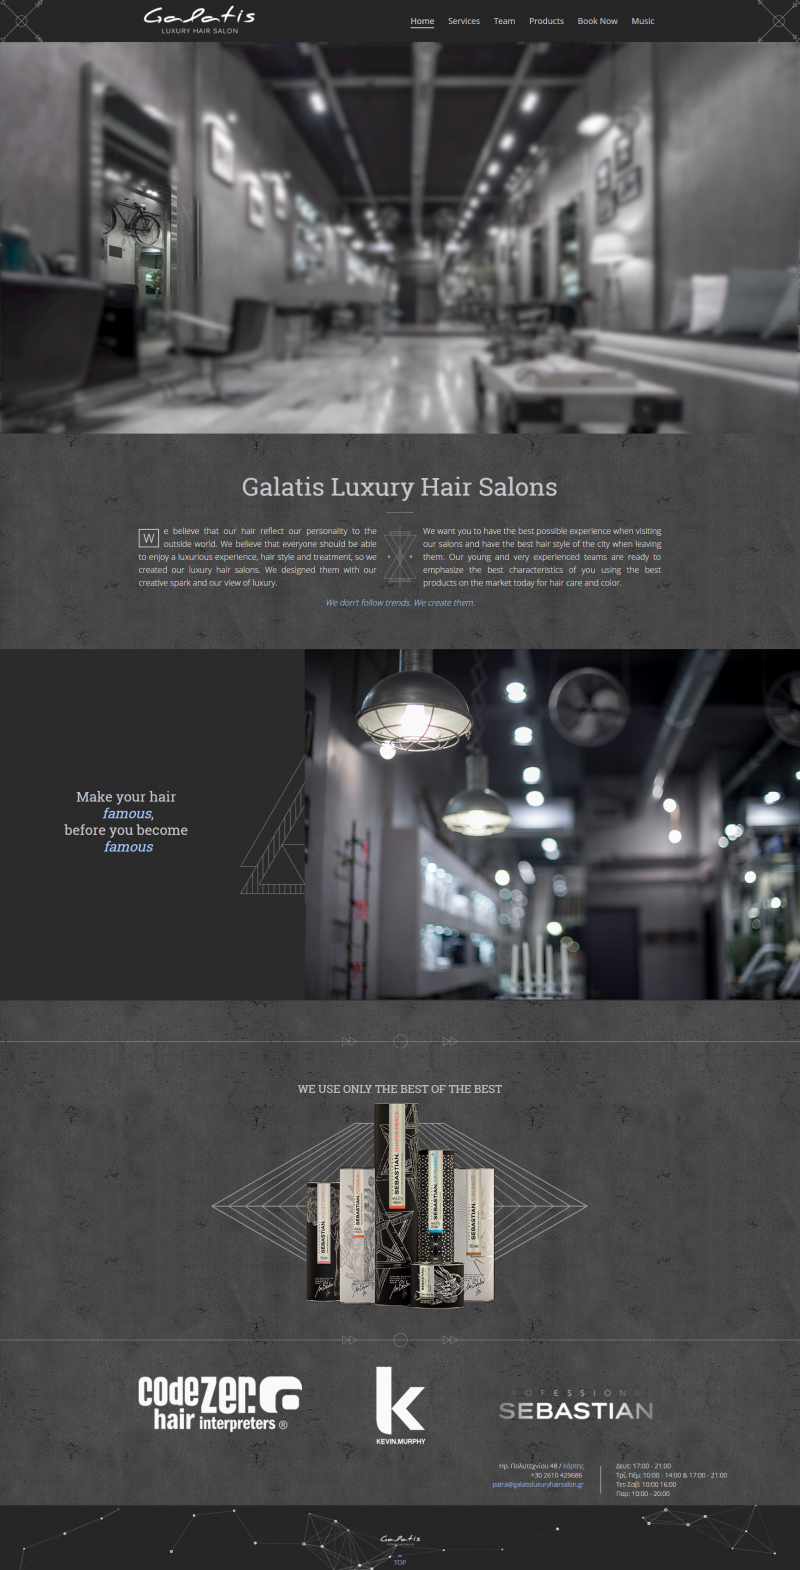 Galatis Luxury Hair Salon Patra 2017 homepage screenshot